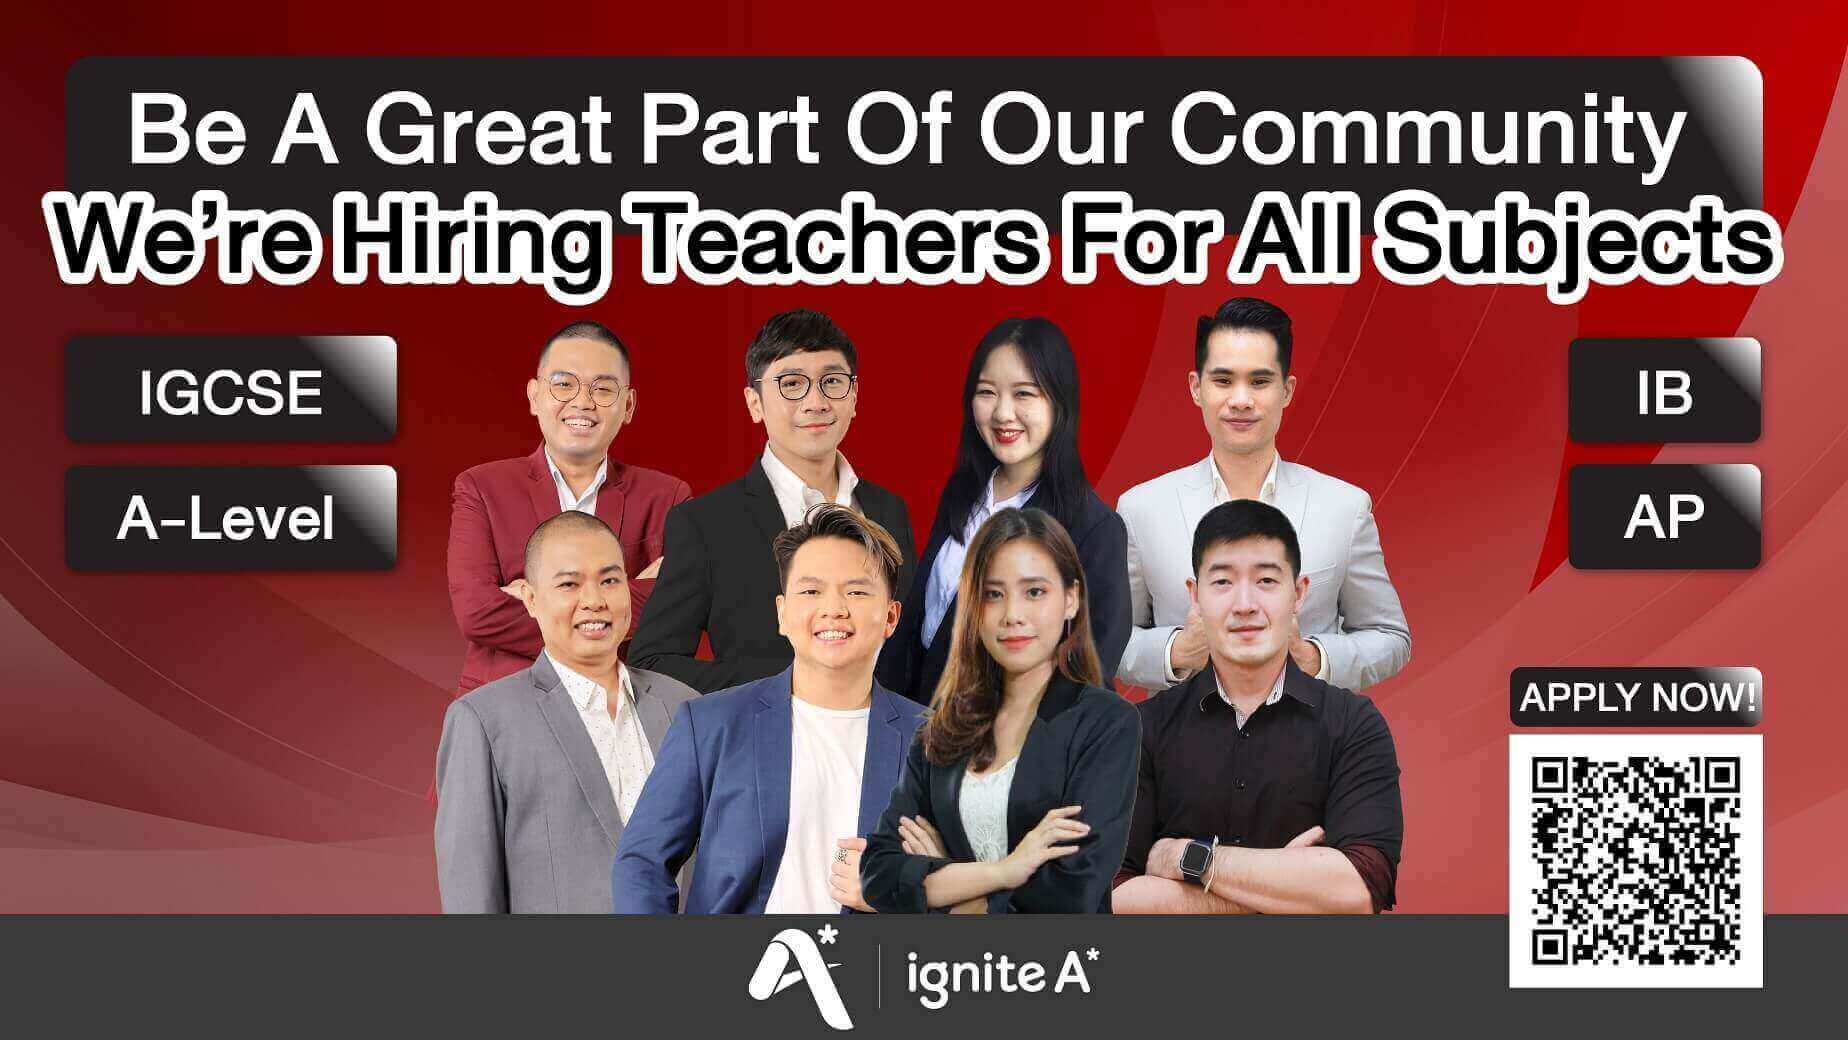 hiring teachers igsce a-level ib ap - ignite a star